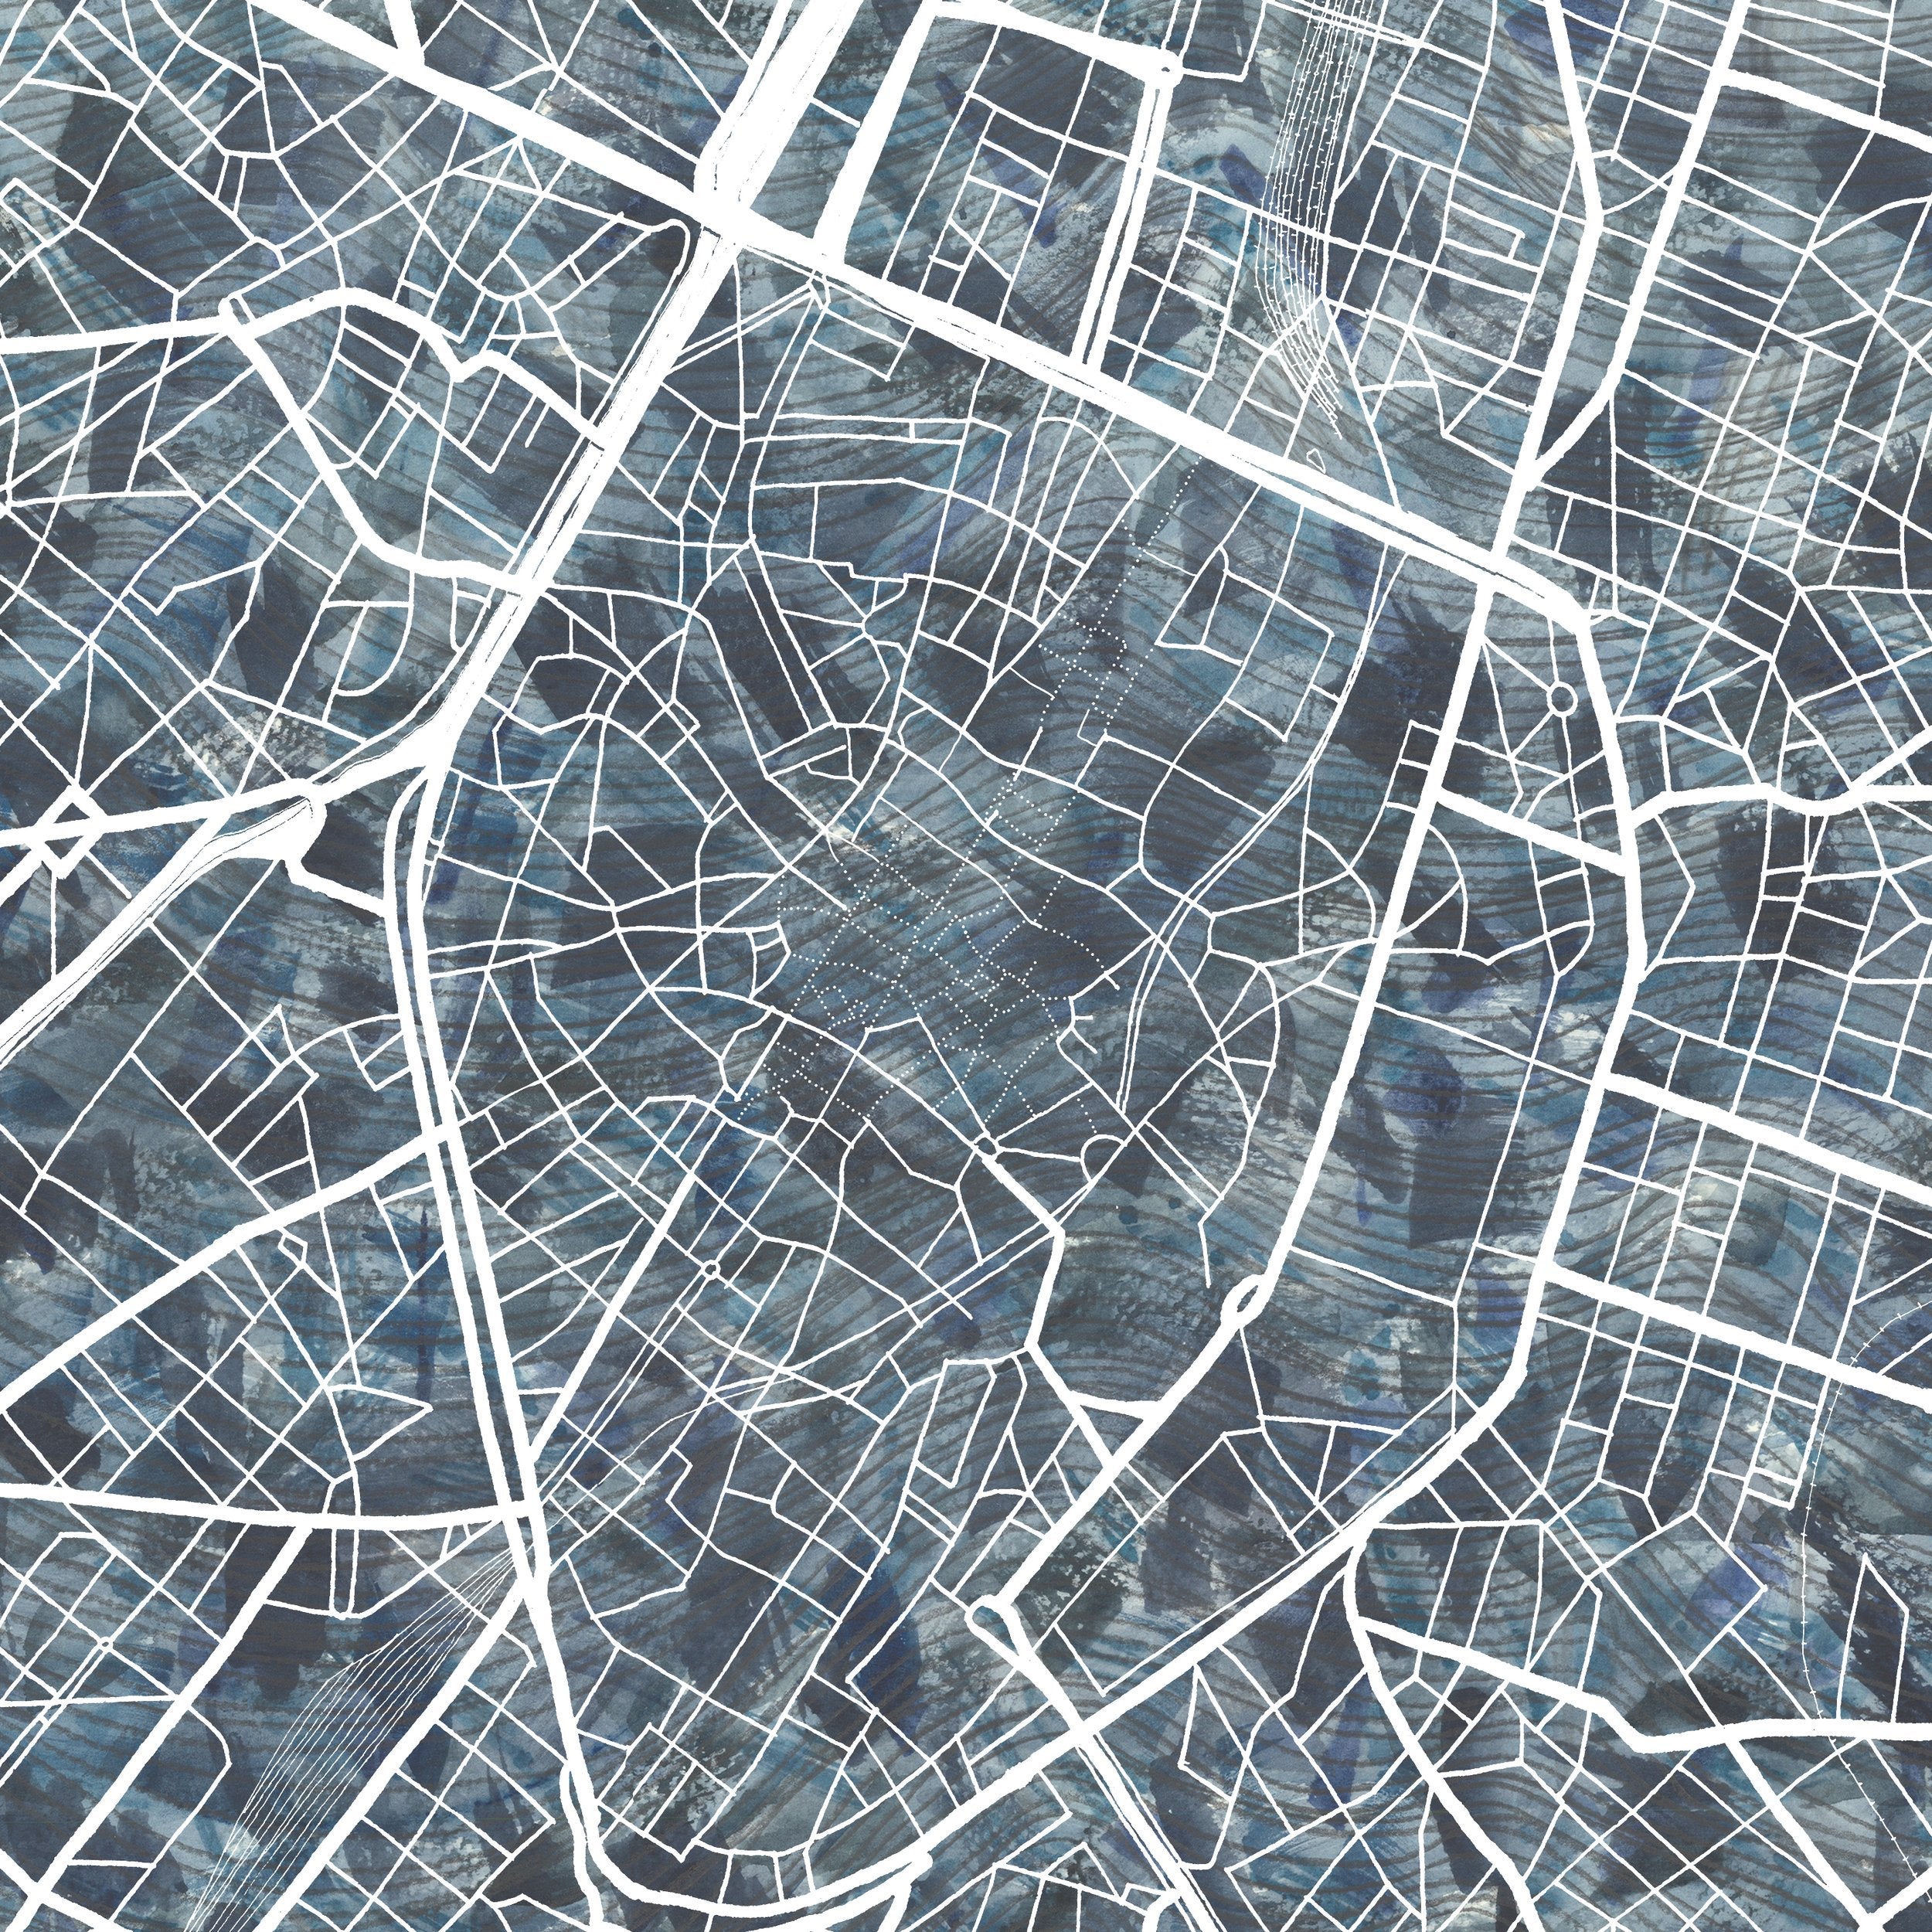 BRUSSELS Urban Fabrics City Map: PRINT